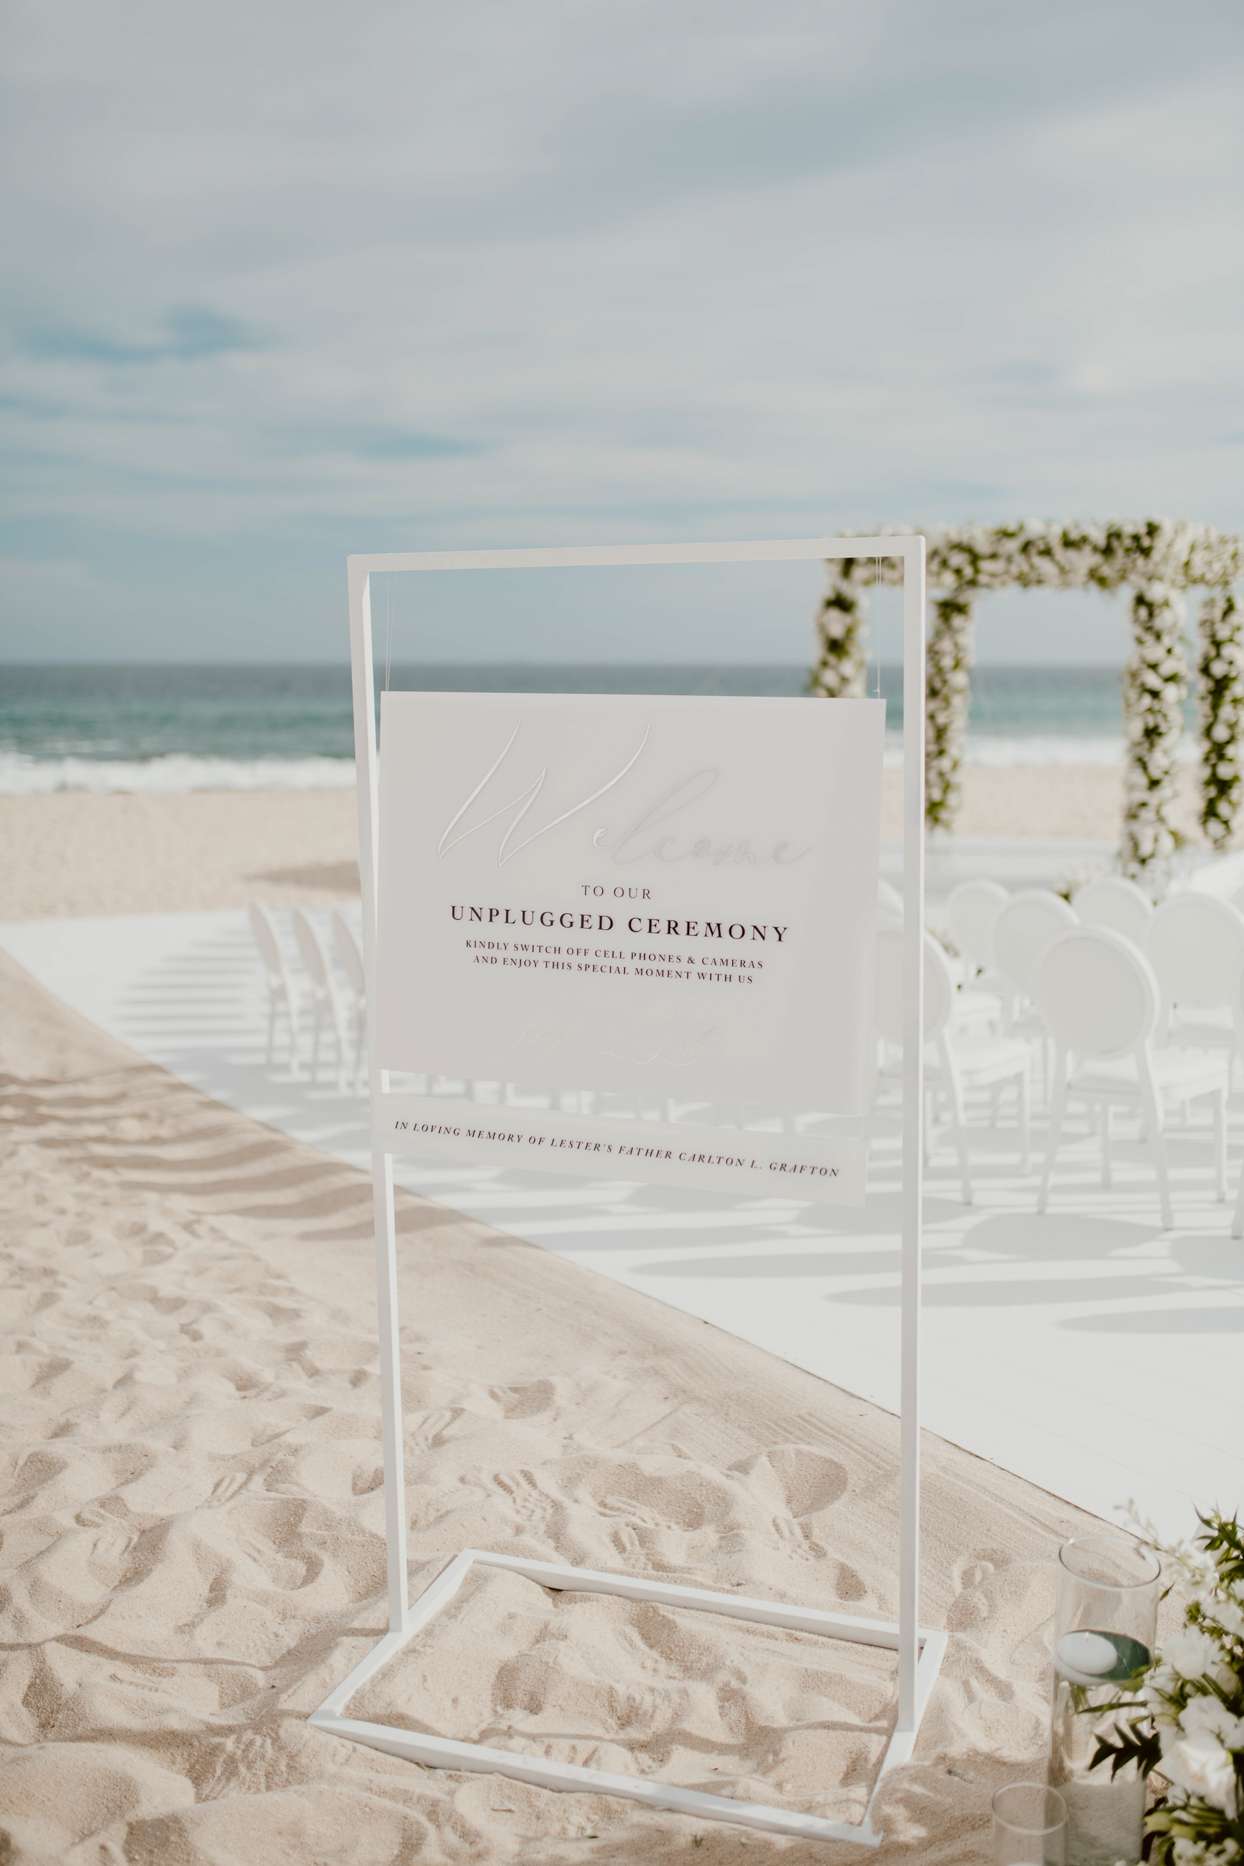 elegant white wedding sign for unplugged ceremony on beach